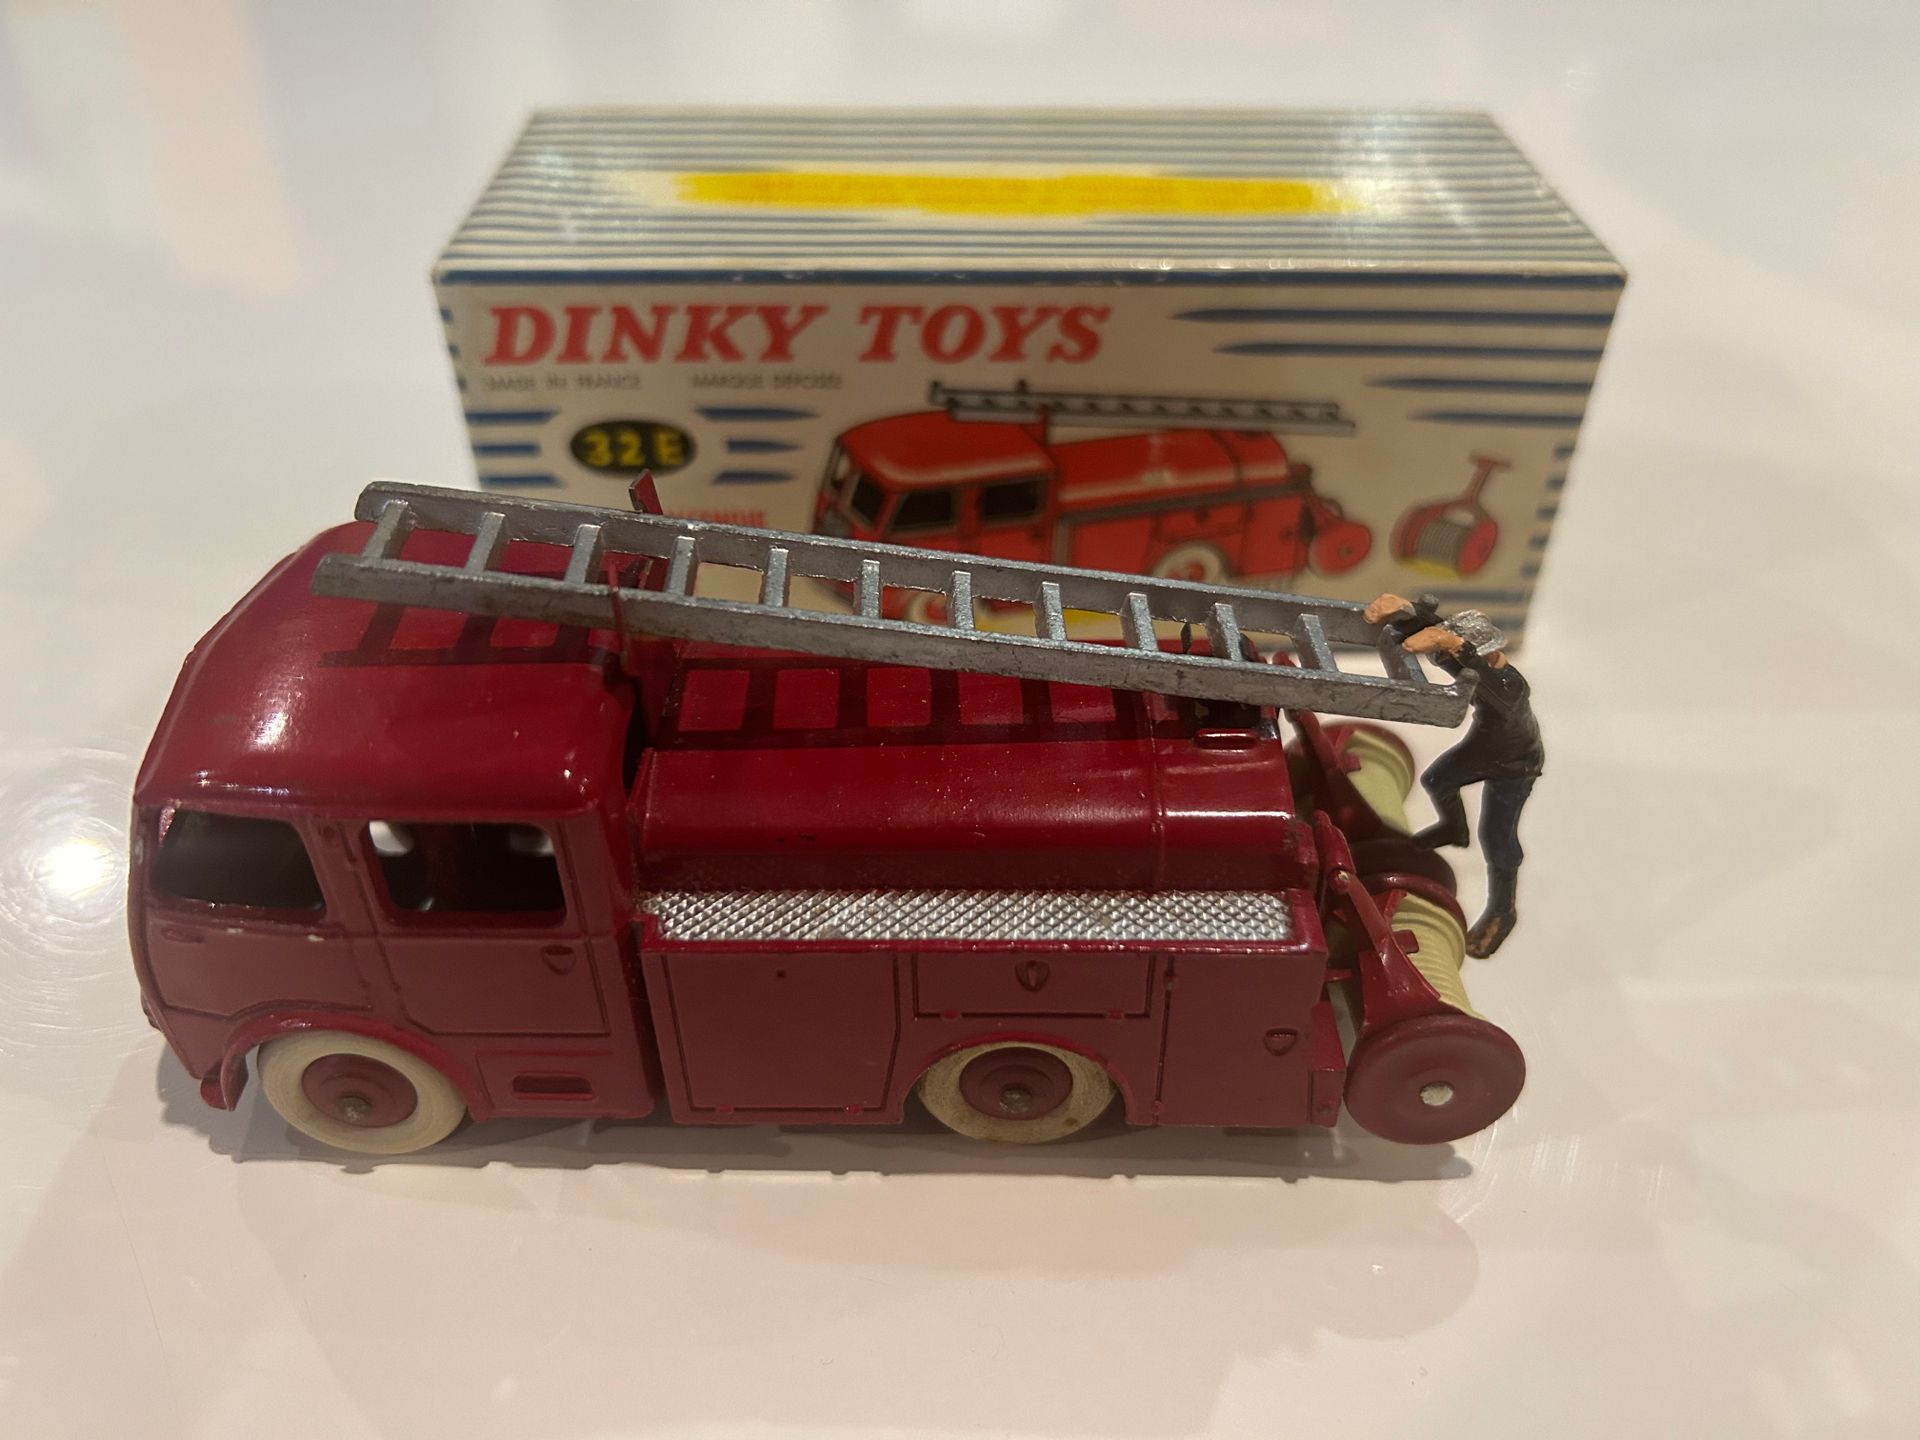 DINKY TOYS DINKY TOYS
32E Fourgon incendie premier secours Berliet
Dans sa boîte